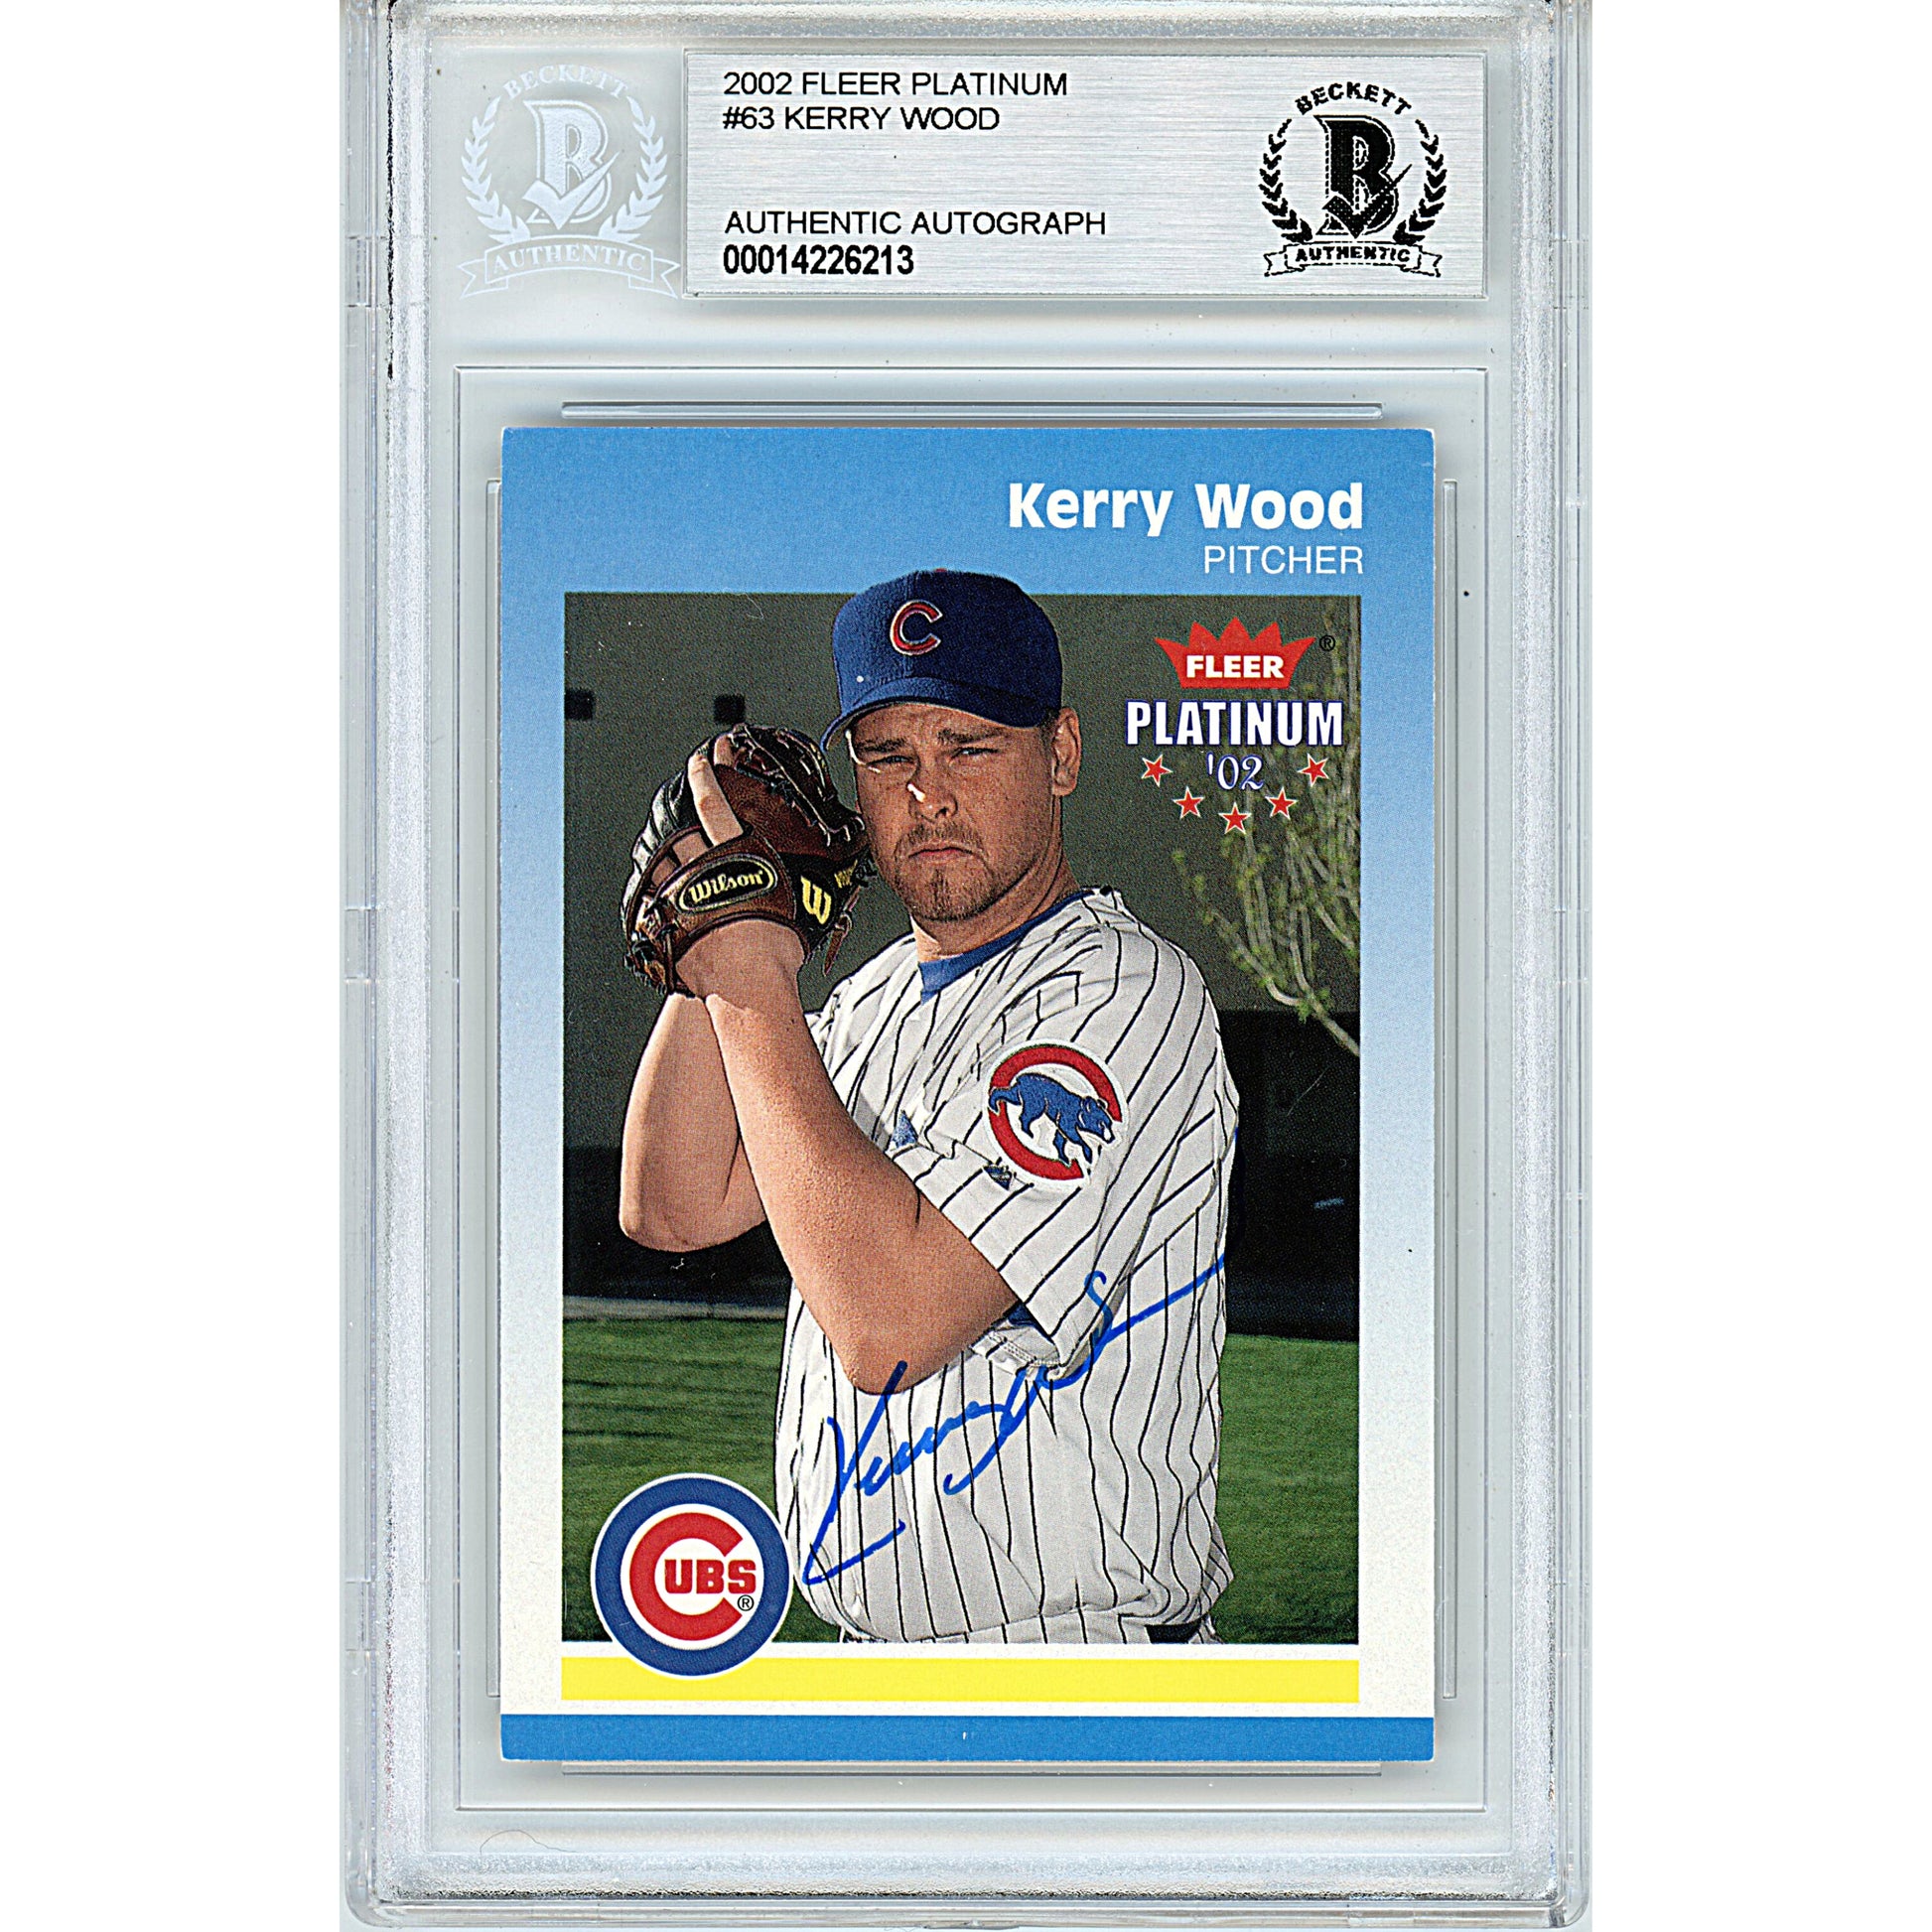 Baseballs- Autographed- Kerry Wood Signed Chicago Cubs 2002 Fleer Tradition Baseball Card Beckett BAS Slabbed 00014226213 - 101